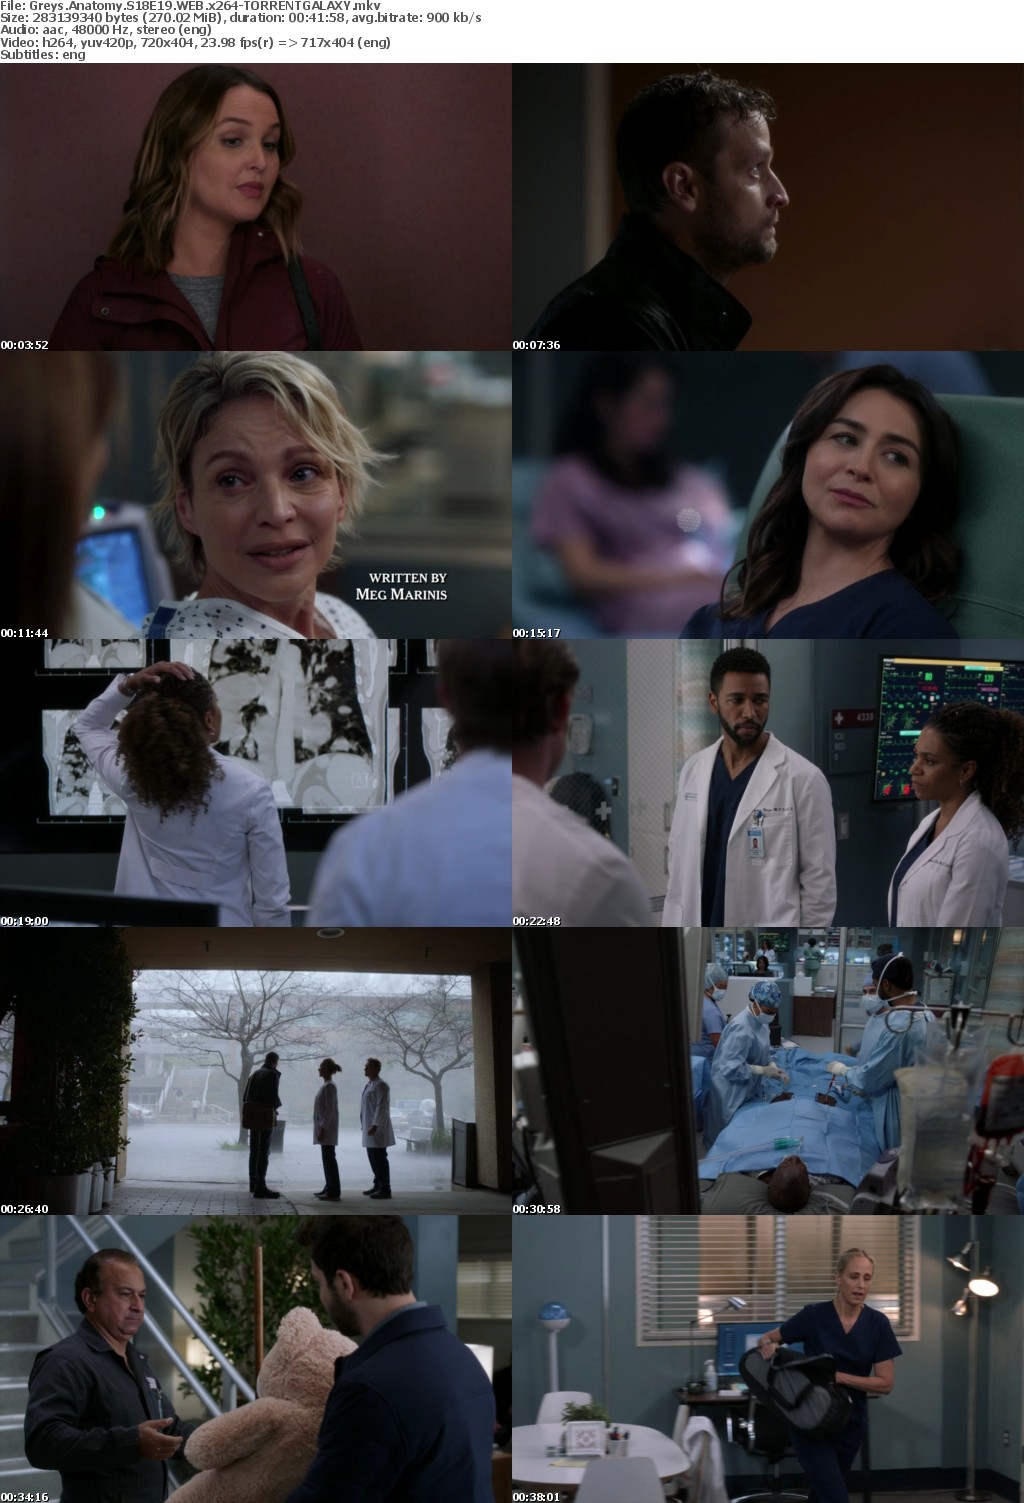 Greys Anatomy S18E19 WEB x264-GALAXY